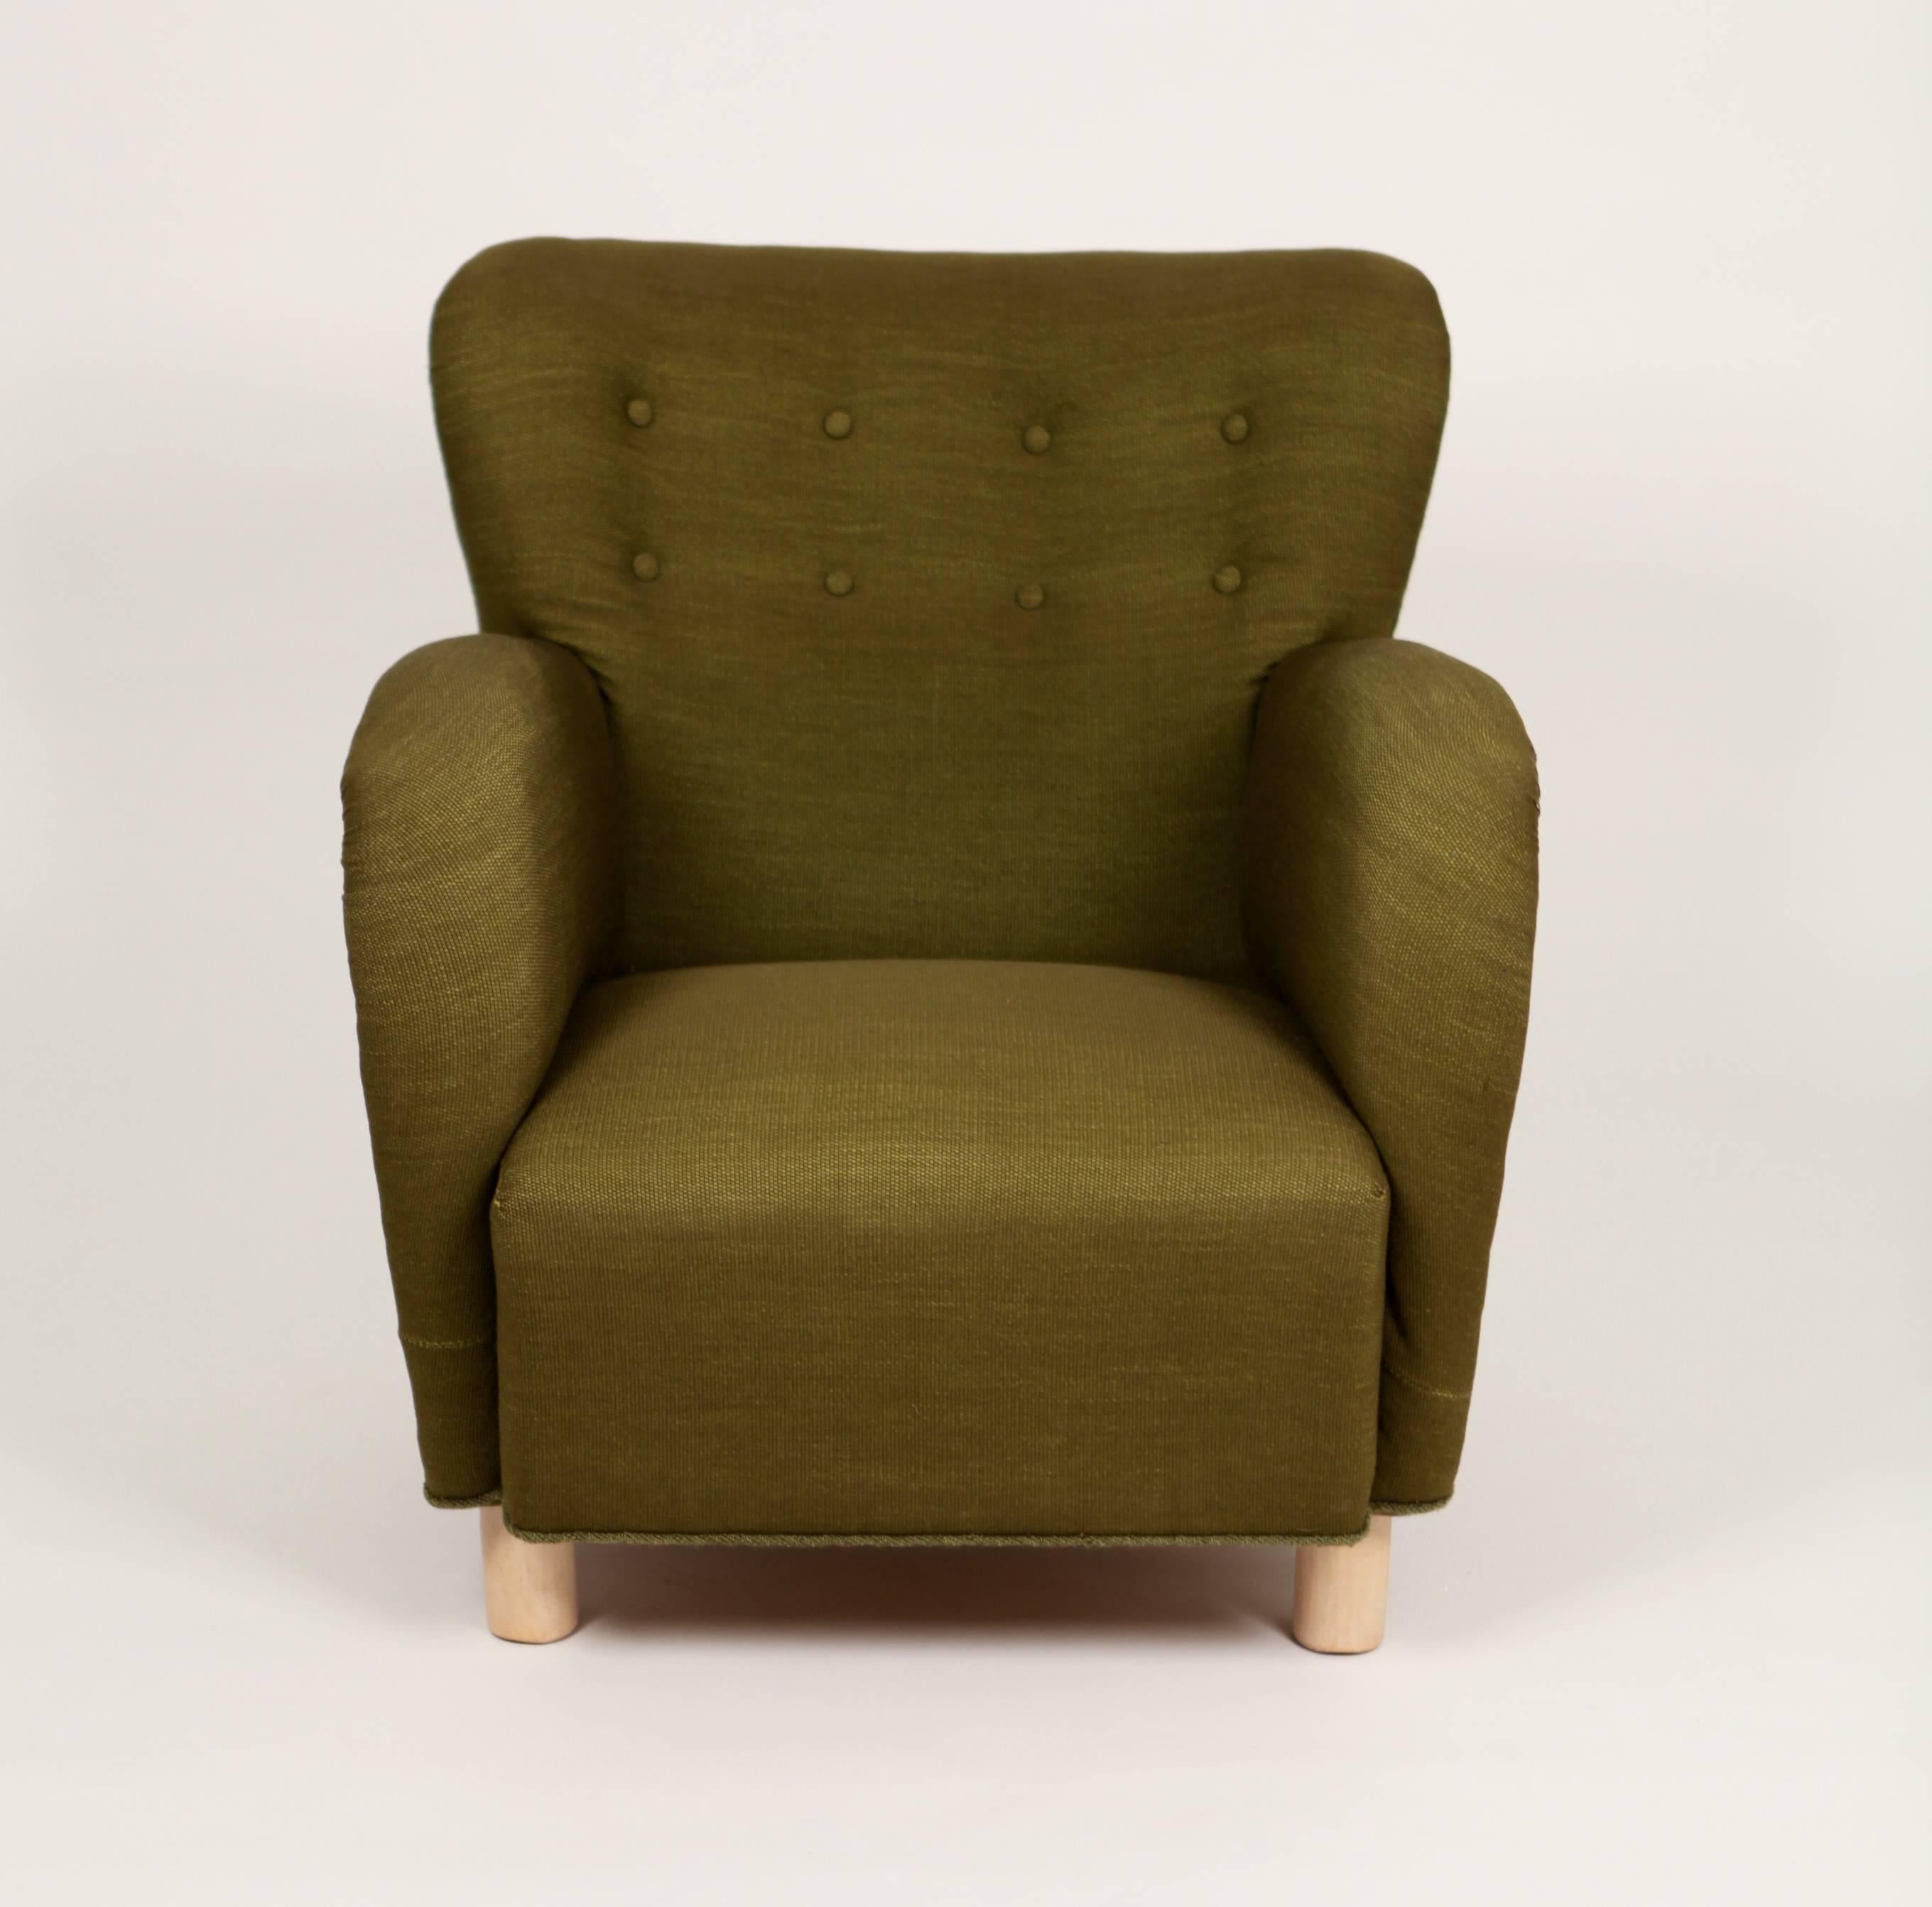 Flemming Lassen attributed armchair,
Denmark, 1930-1940.
Upholstered in green wool.
Legs in birch.